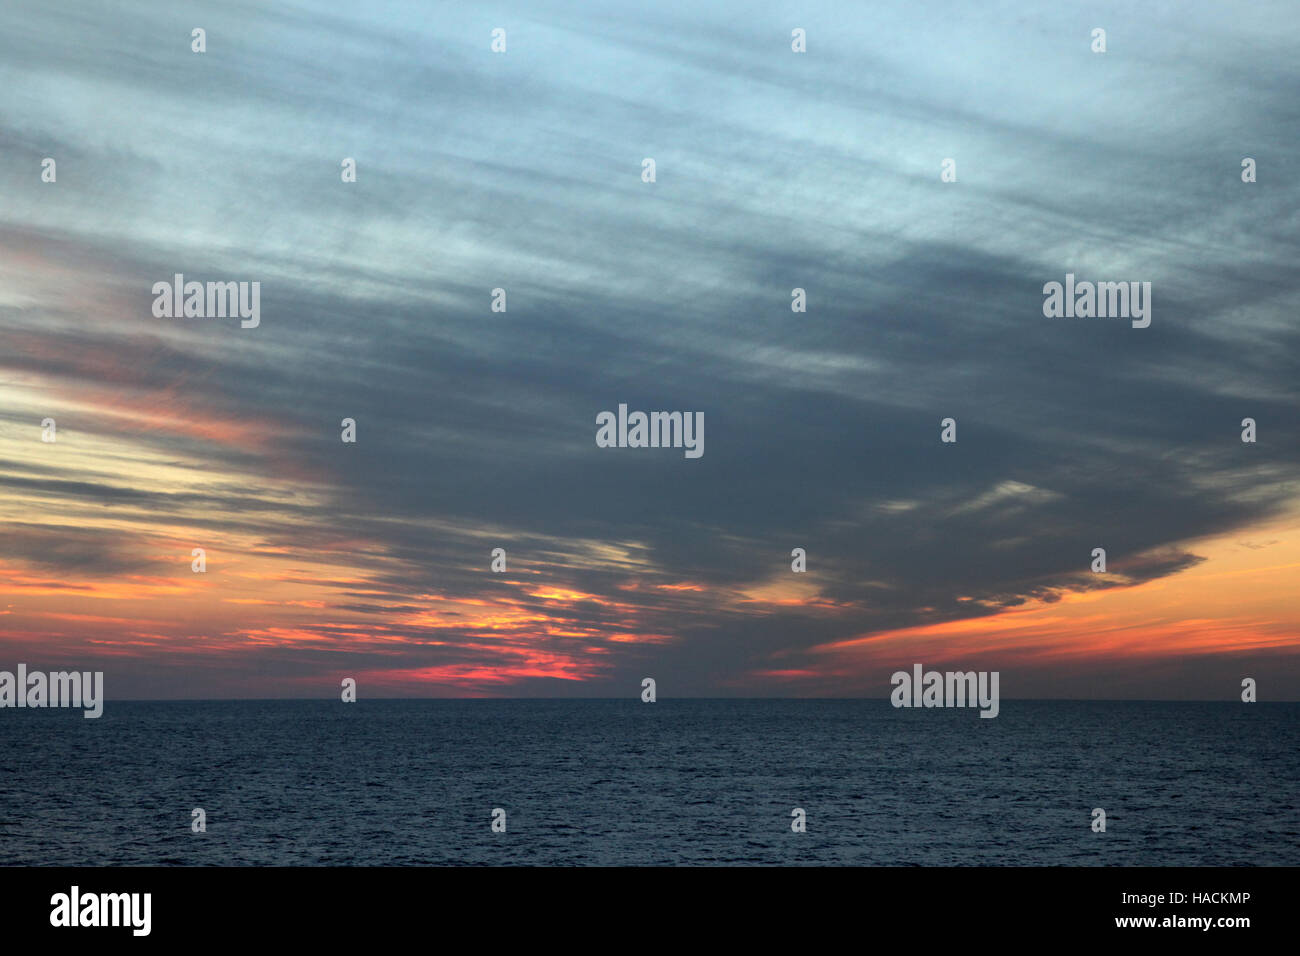 Sunset over the Ocean, off the coast of Cuba, Caribbean. Stock Photo